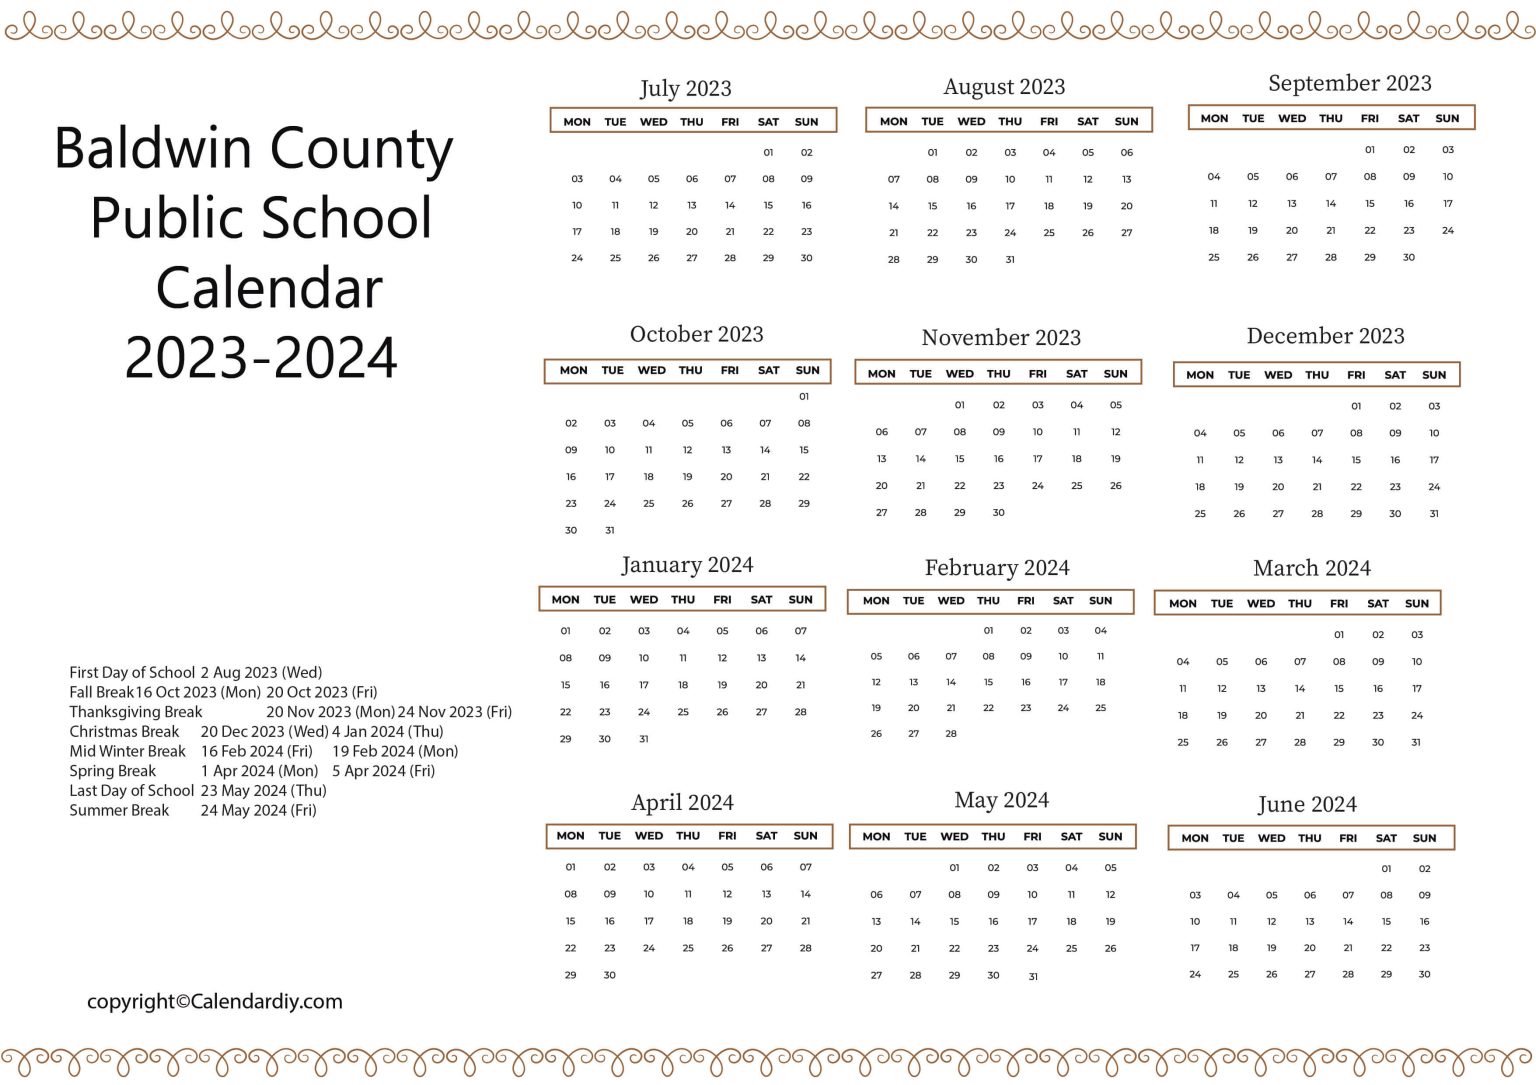 Baldwin County School Calendar 202324 Printable in PDF